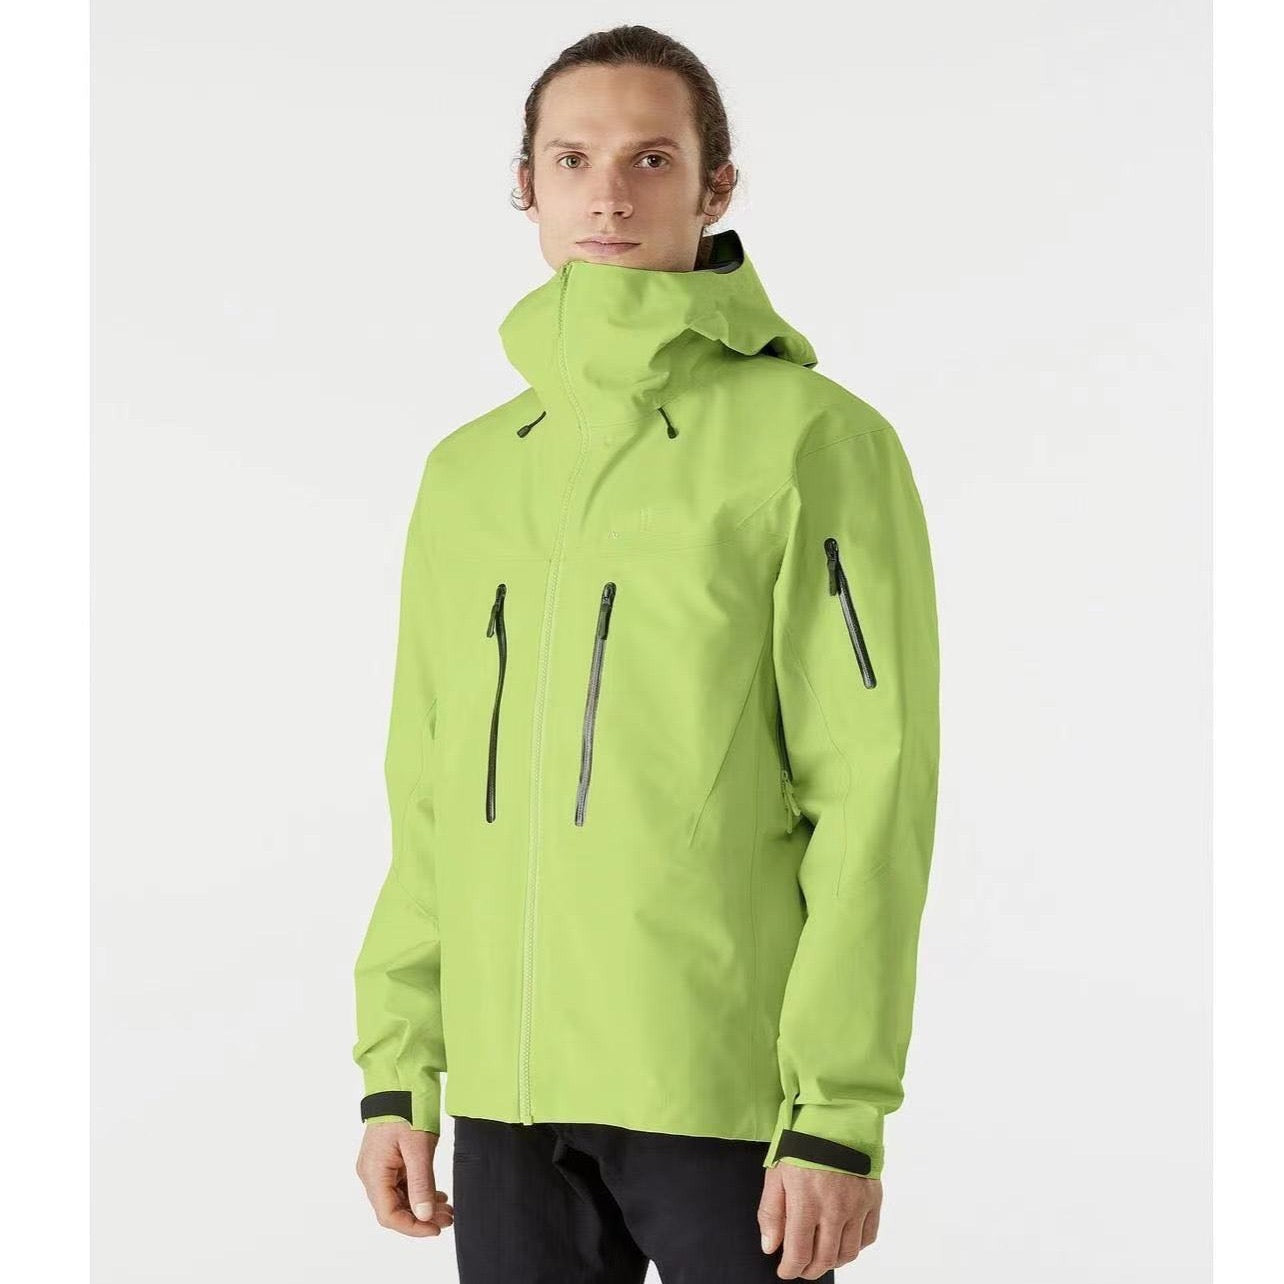 Alpha SV Anorak Windbreaker Hardshell 3L Jacket unisex | Nylon & Spandex, Outdoor Superior Rain and Wind Resistance